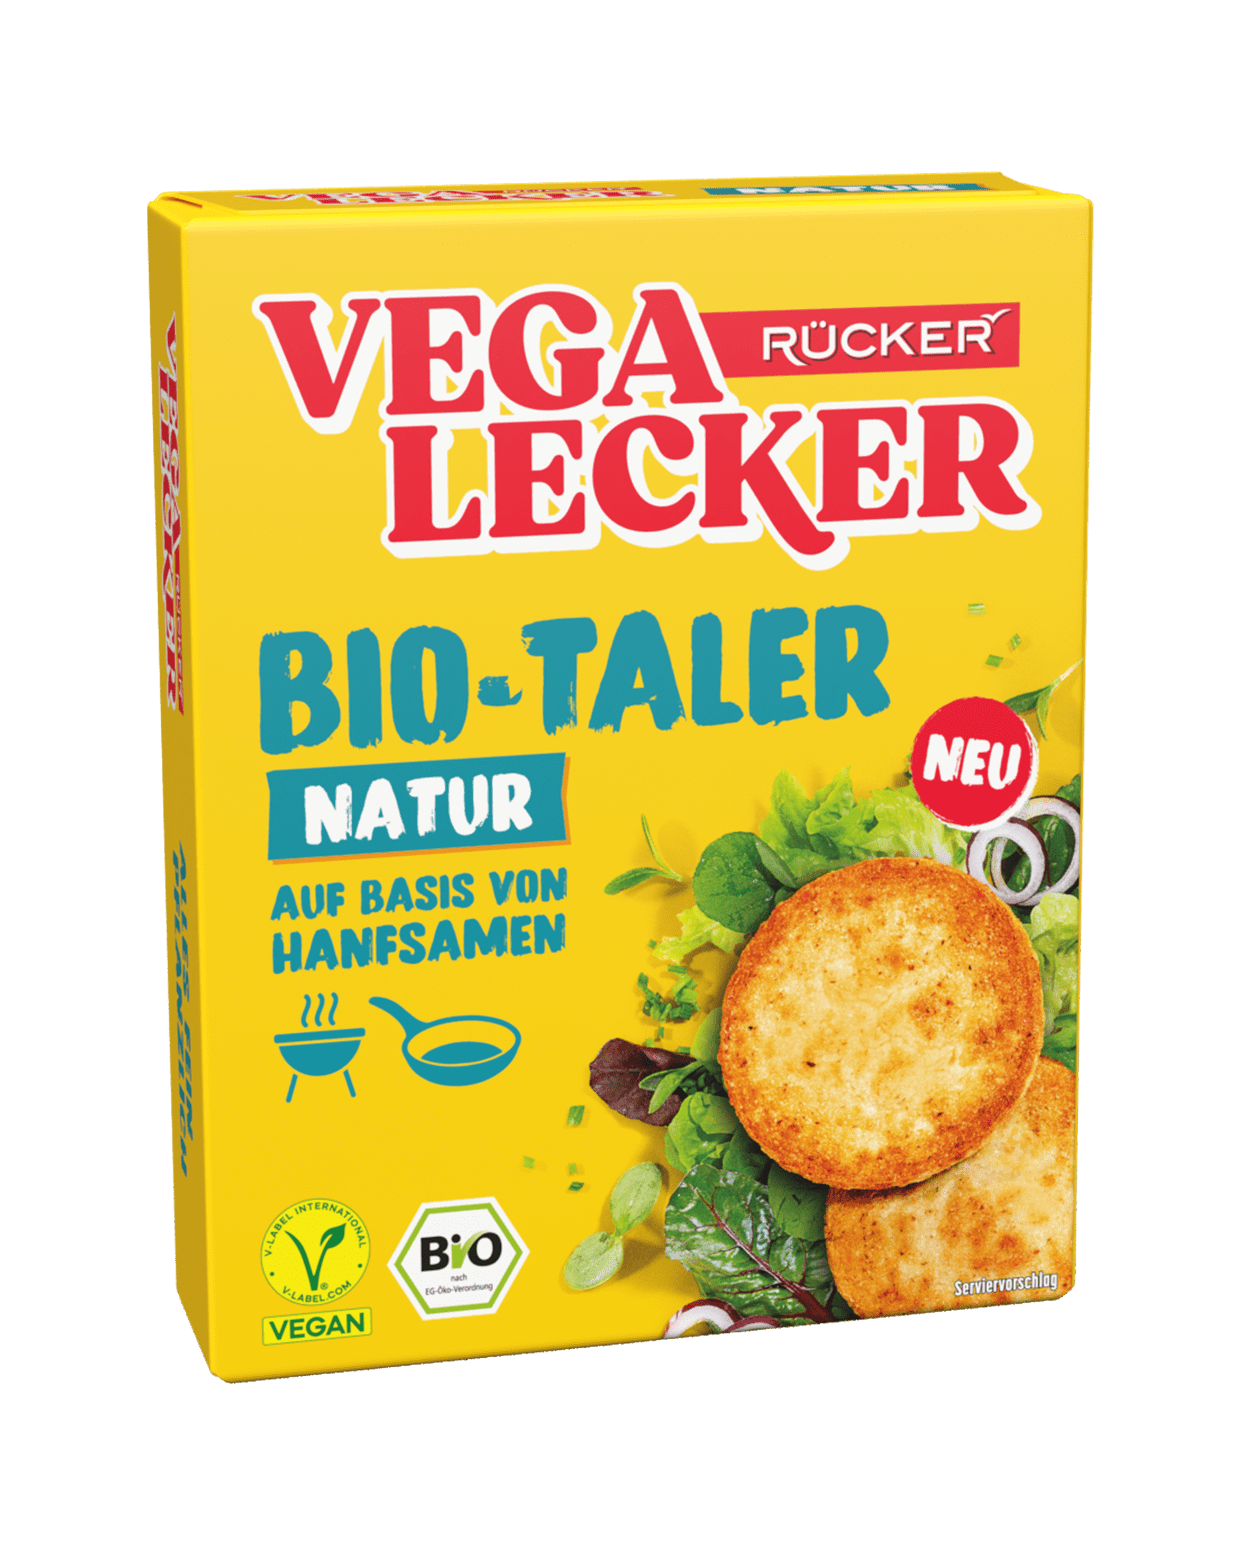 RÜCKER Vega Lecker Bio-Taler Natur